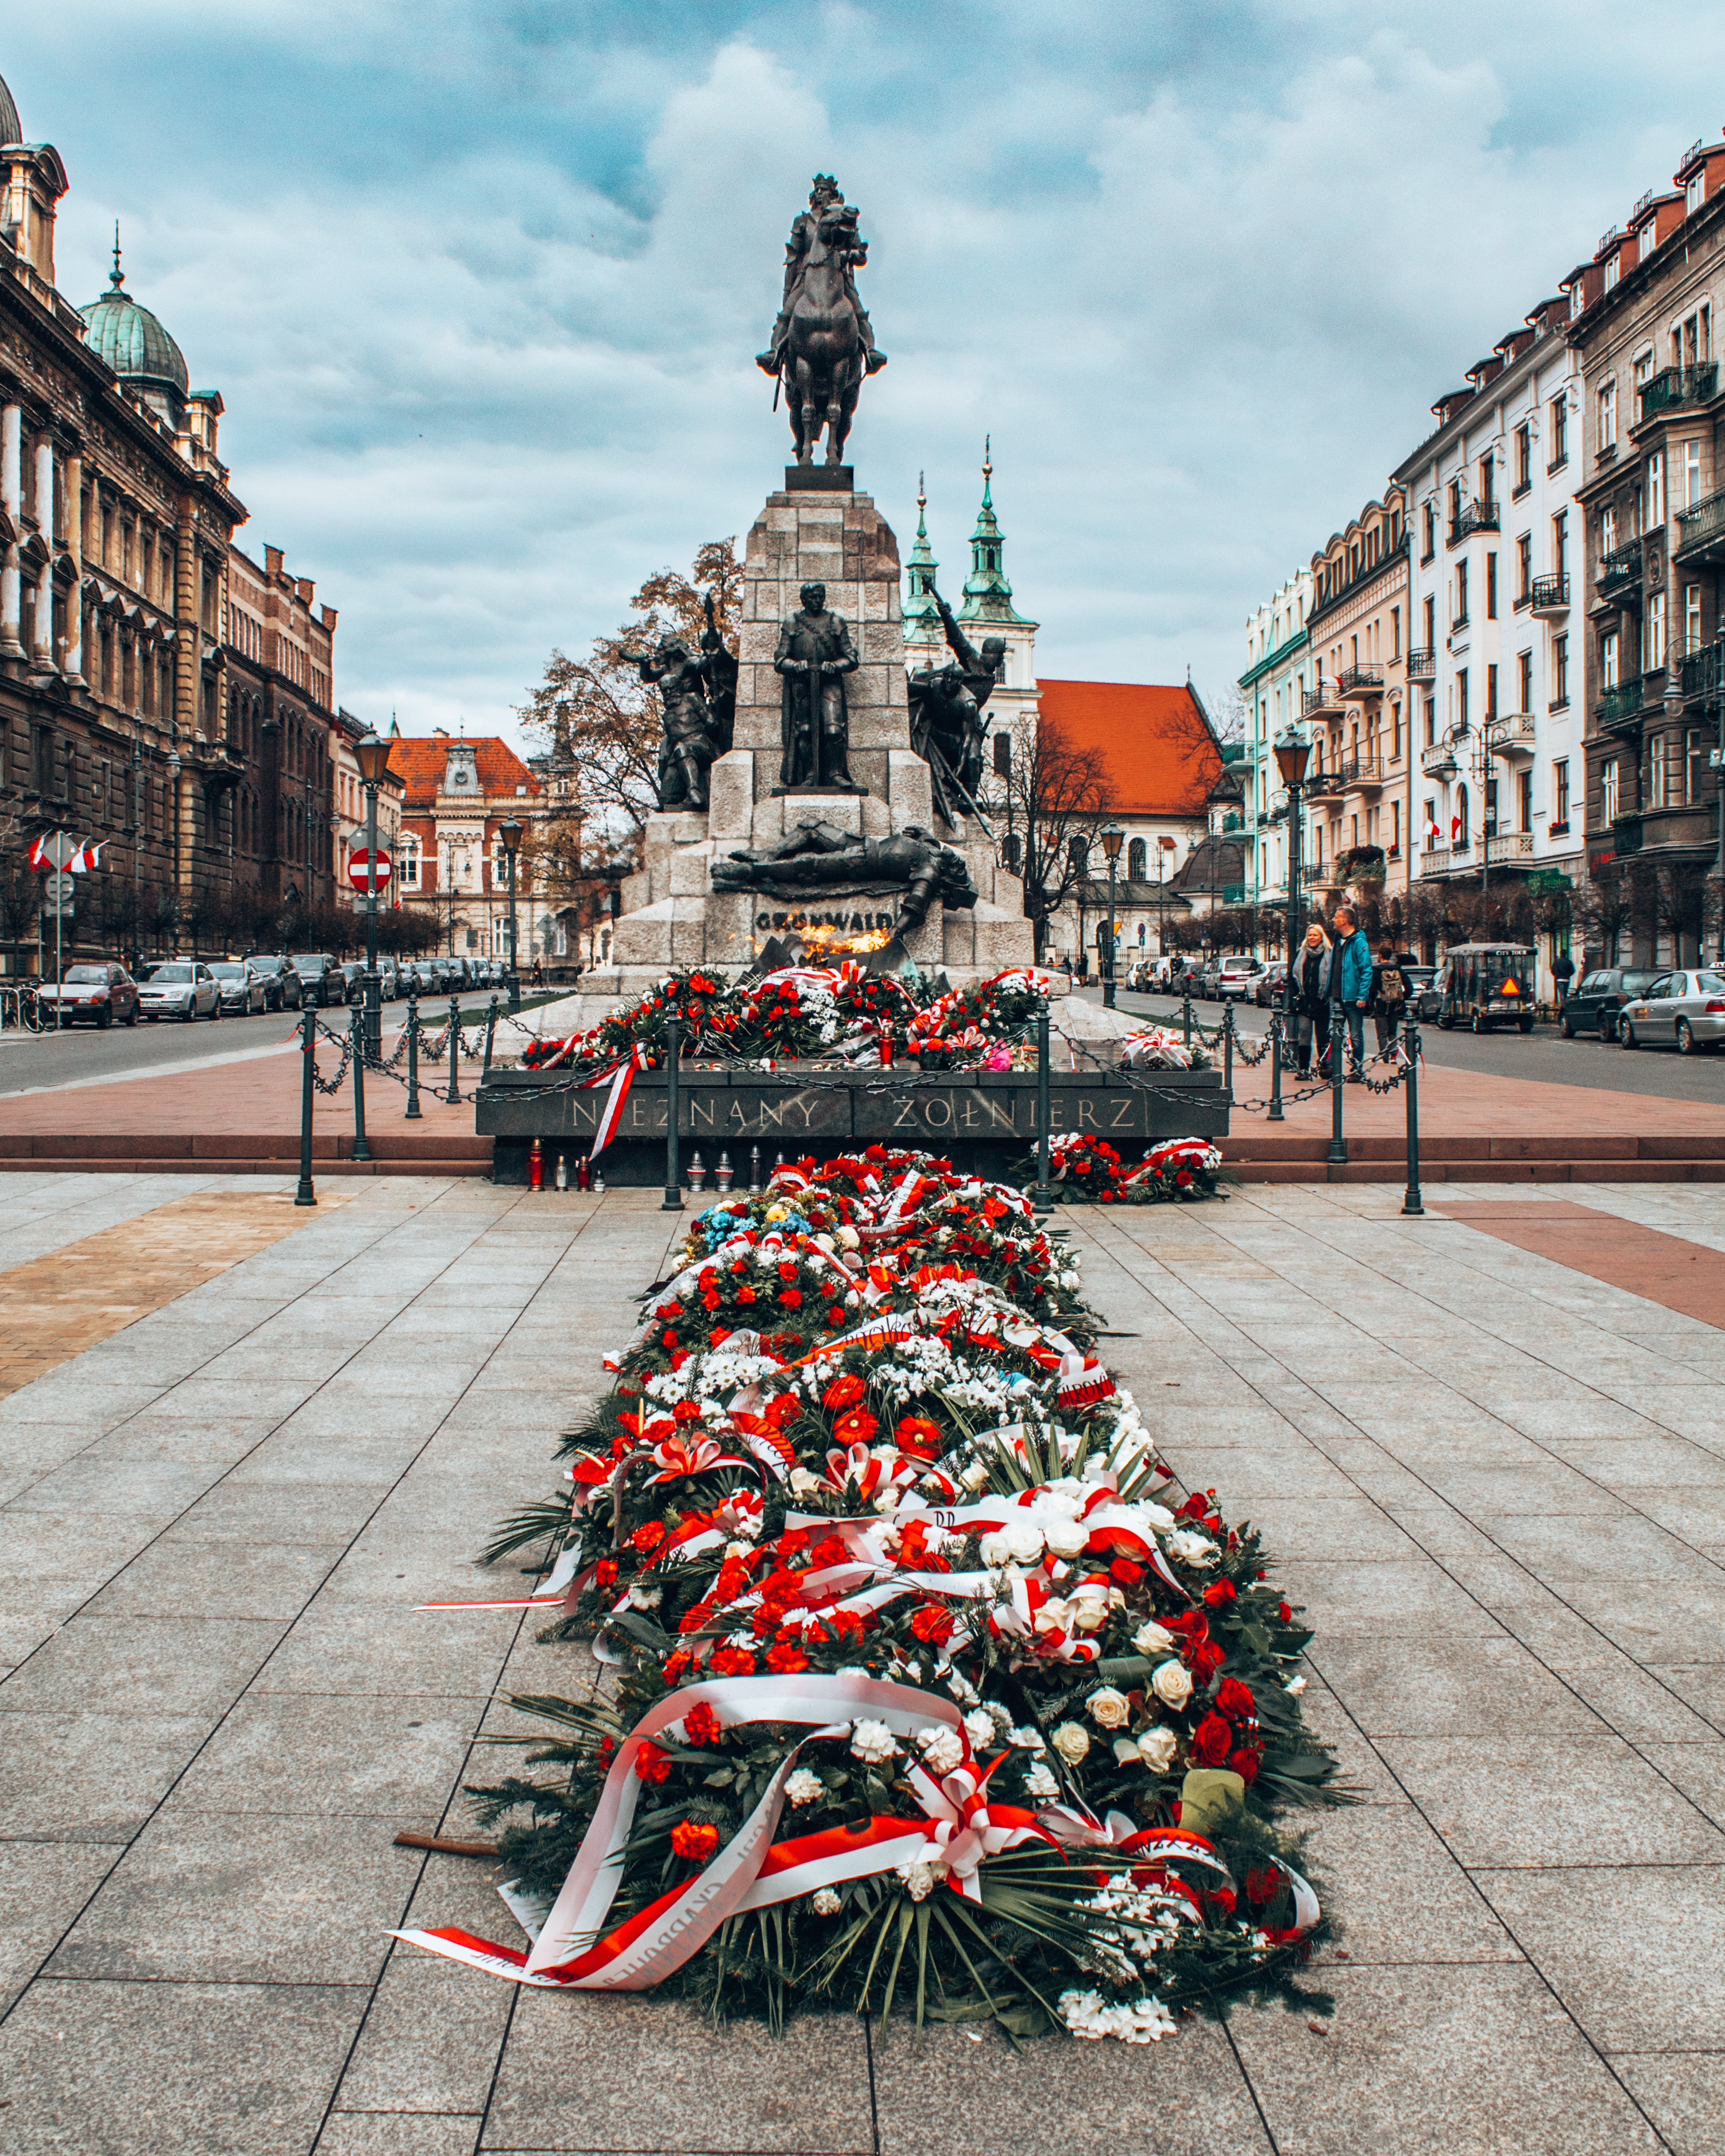 The Grunwald monument in Krakow, Poland